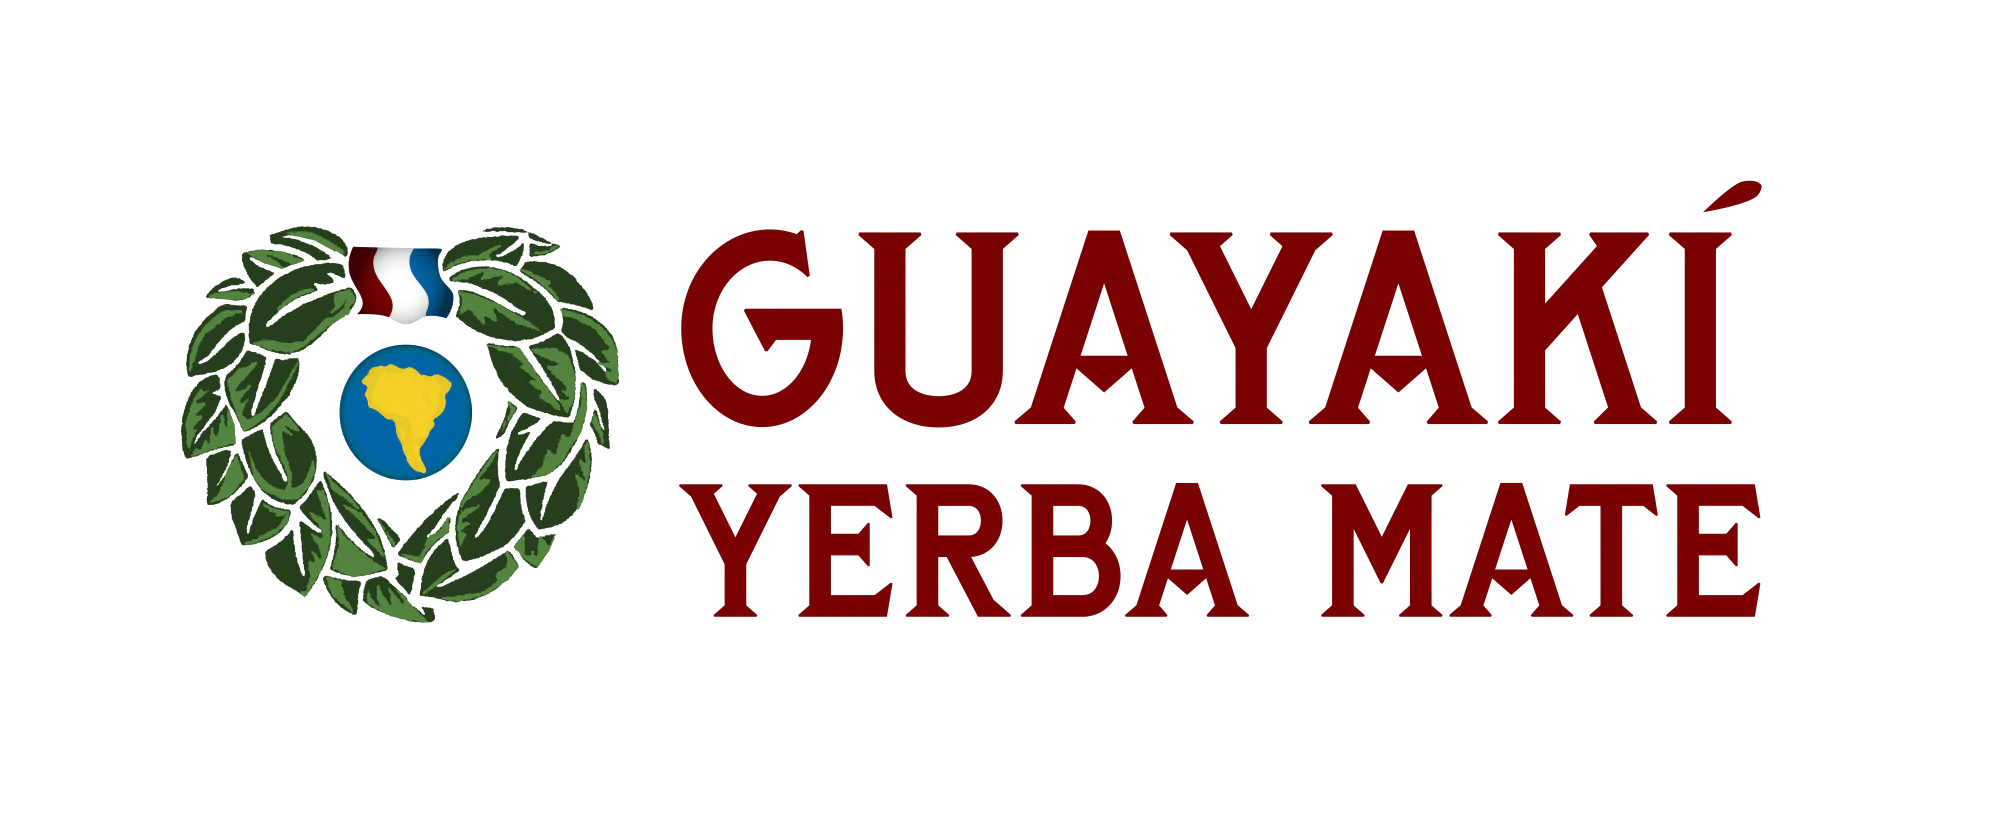 Guayaki Yerba Mate Logo